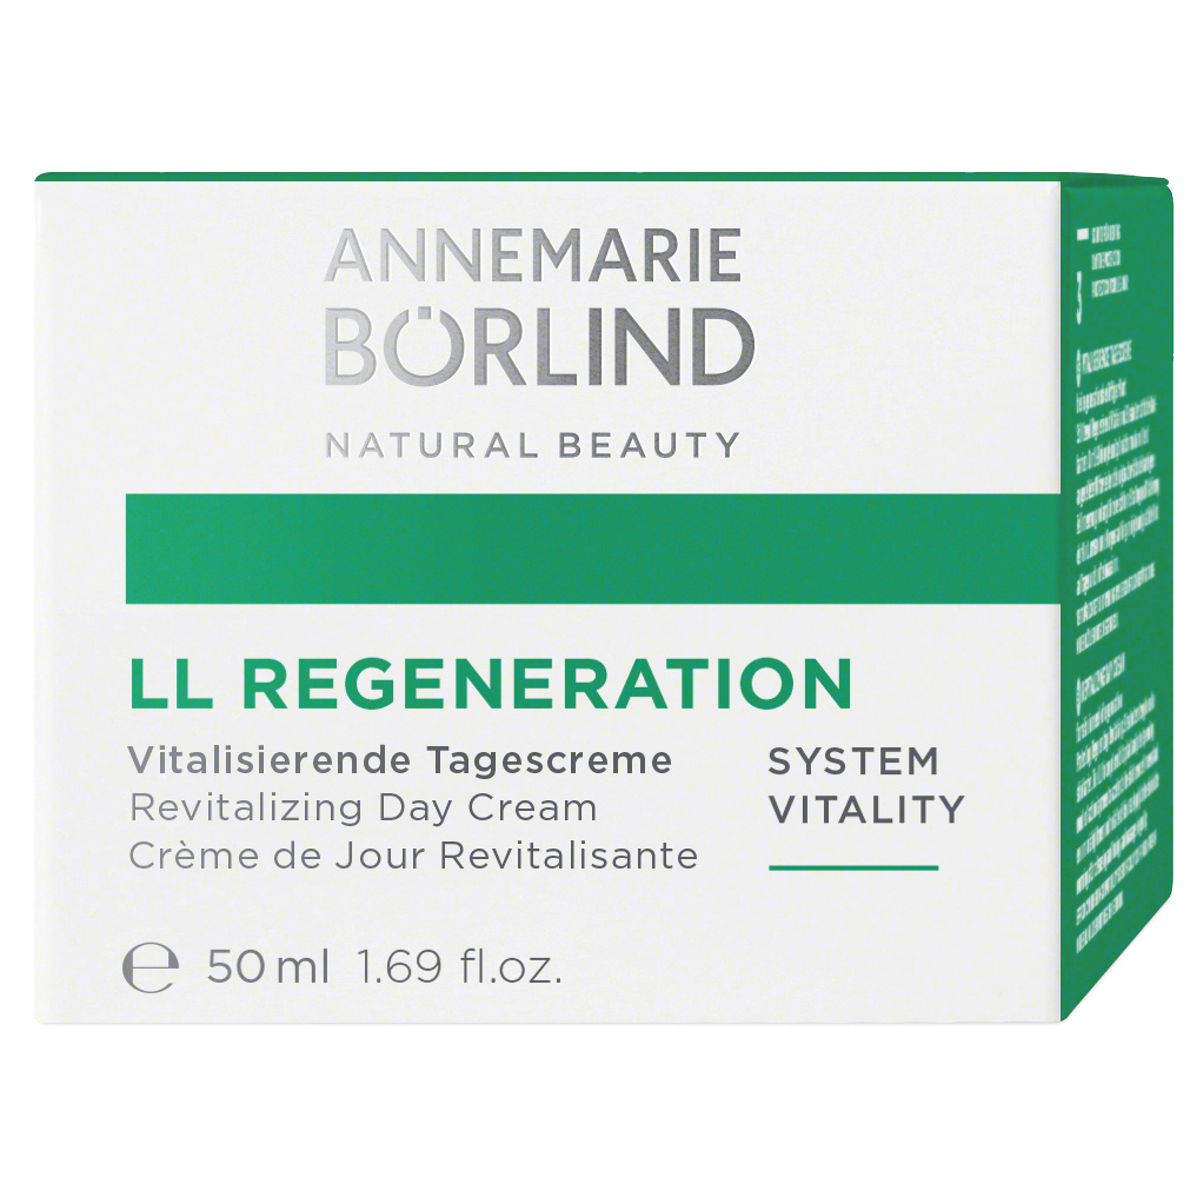 Annemarie Börlind LL Regeneration System Vitality Tagescreme